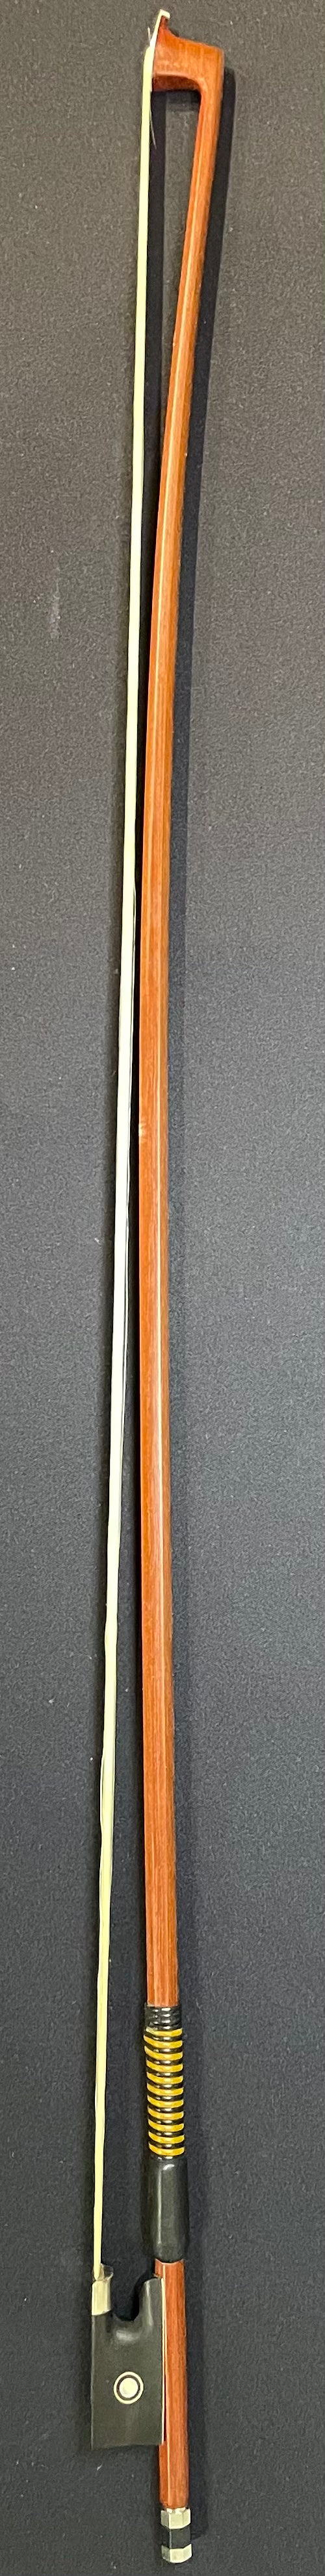 Starter Violin Bow - Wood